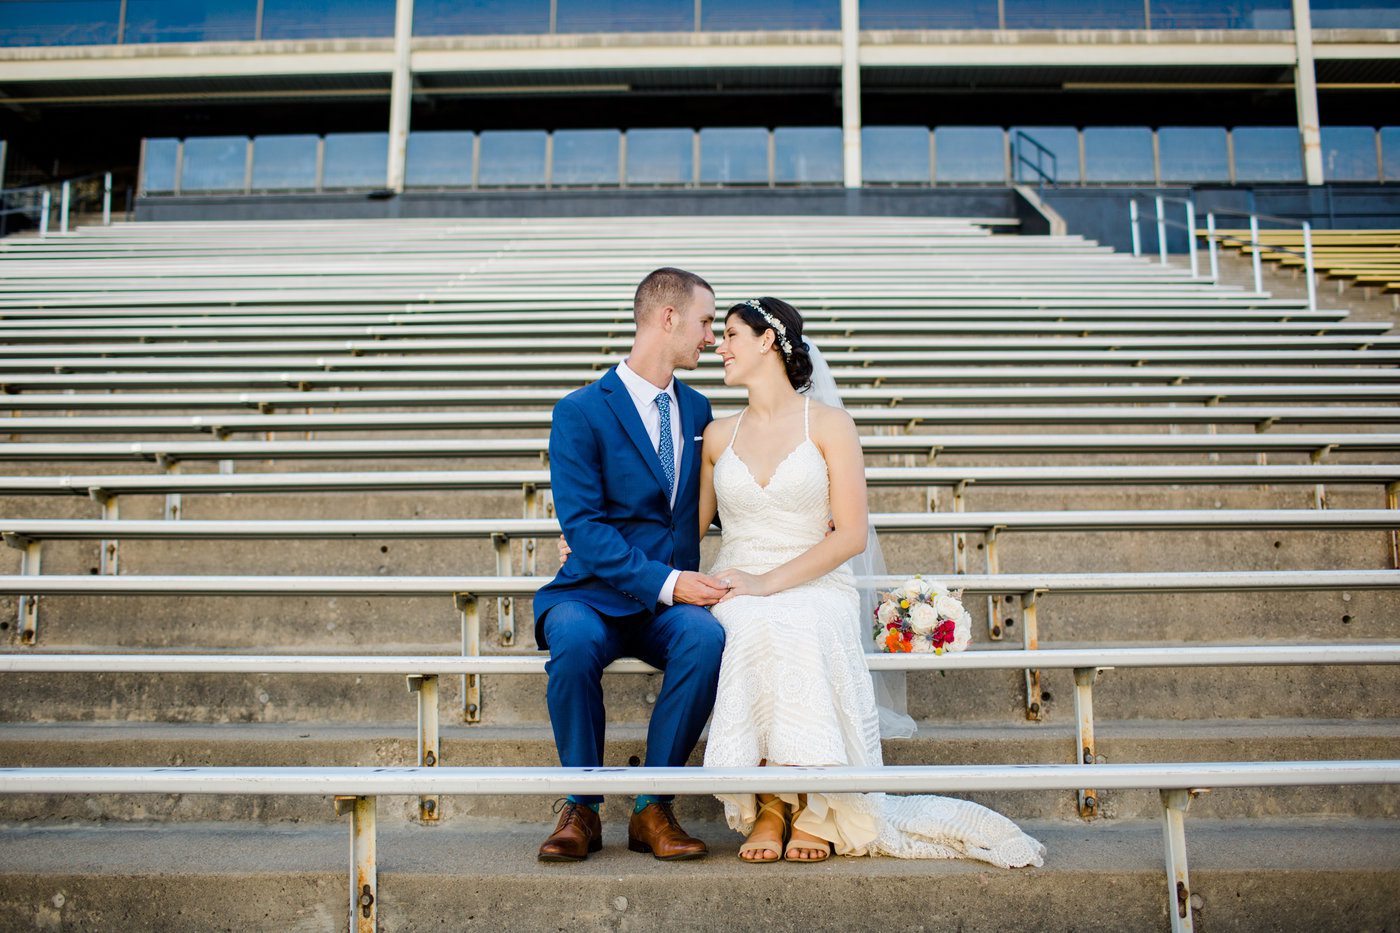 Football stadium wedding photo